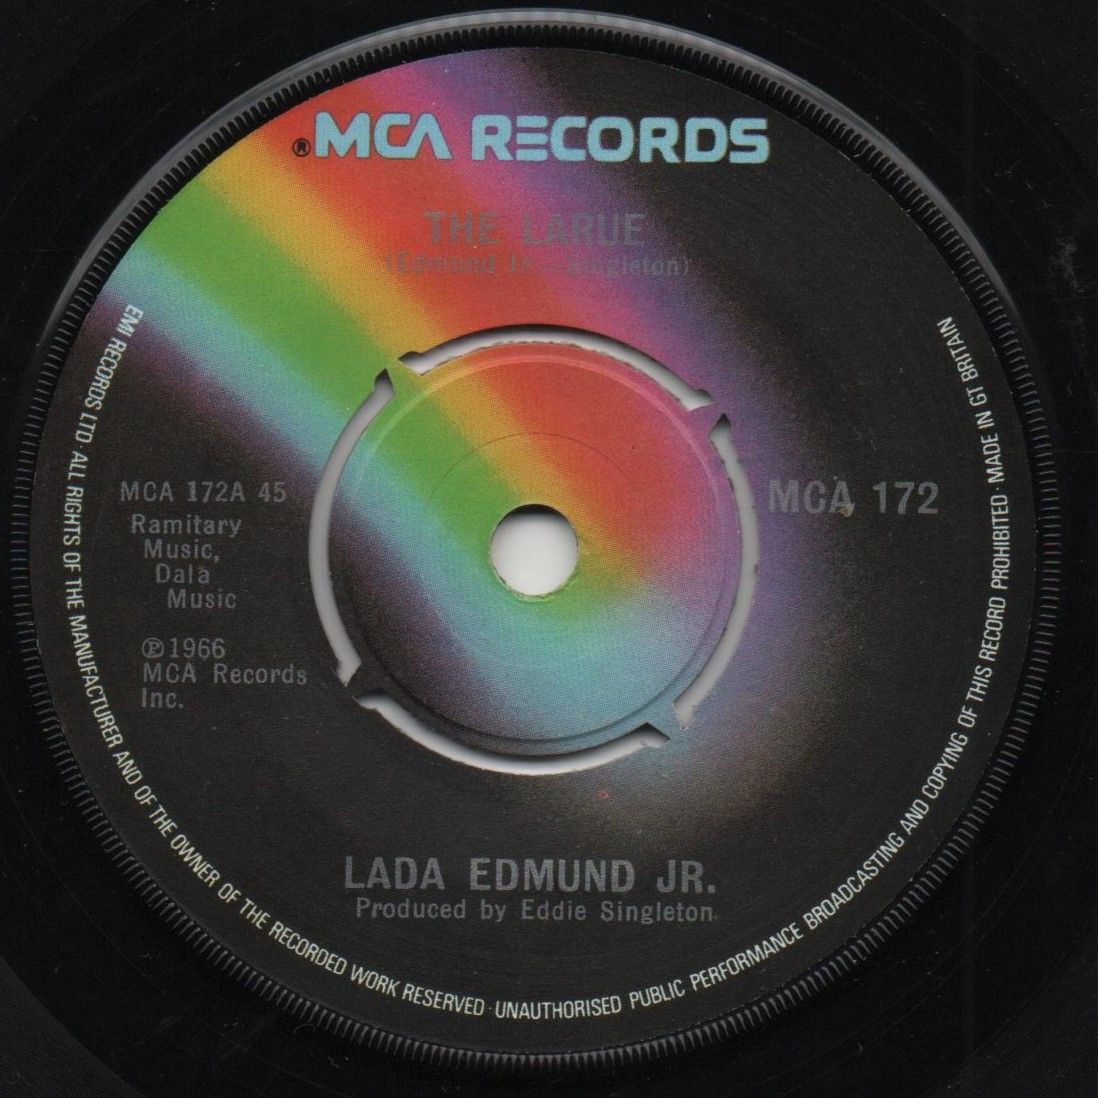 LADA EDMUND JR - THE LARUE